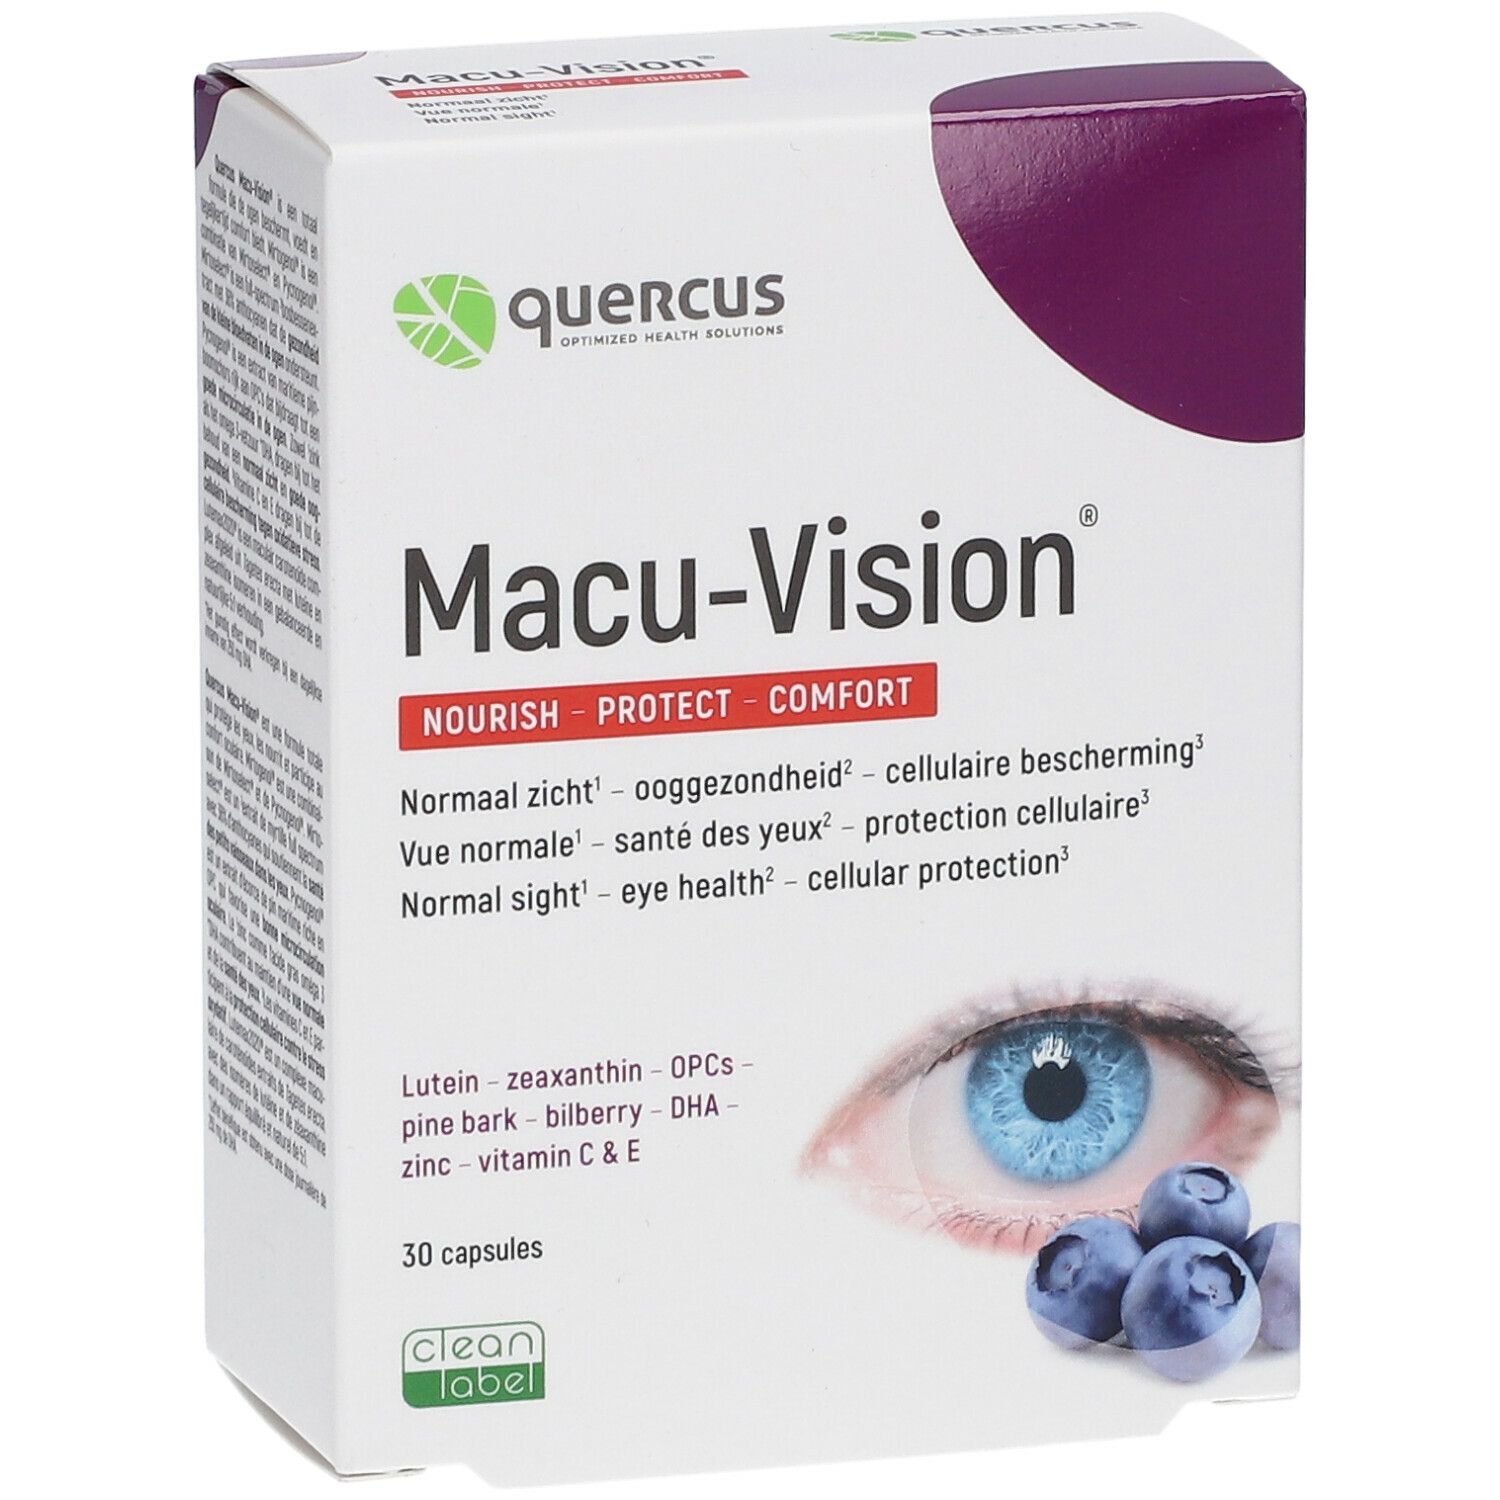 Quercus Macu-Vision® Nourish - Protect - Comfort